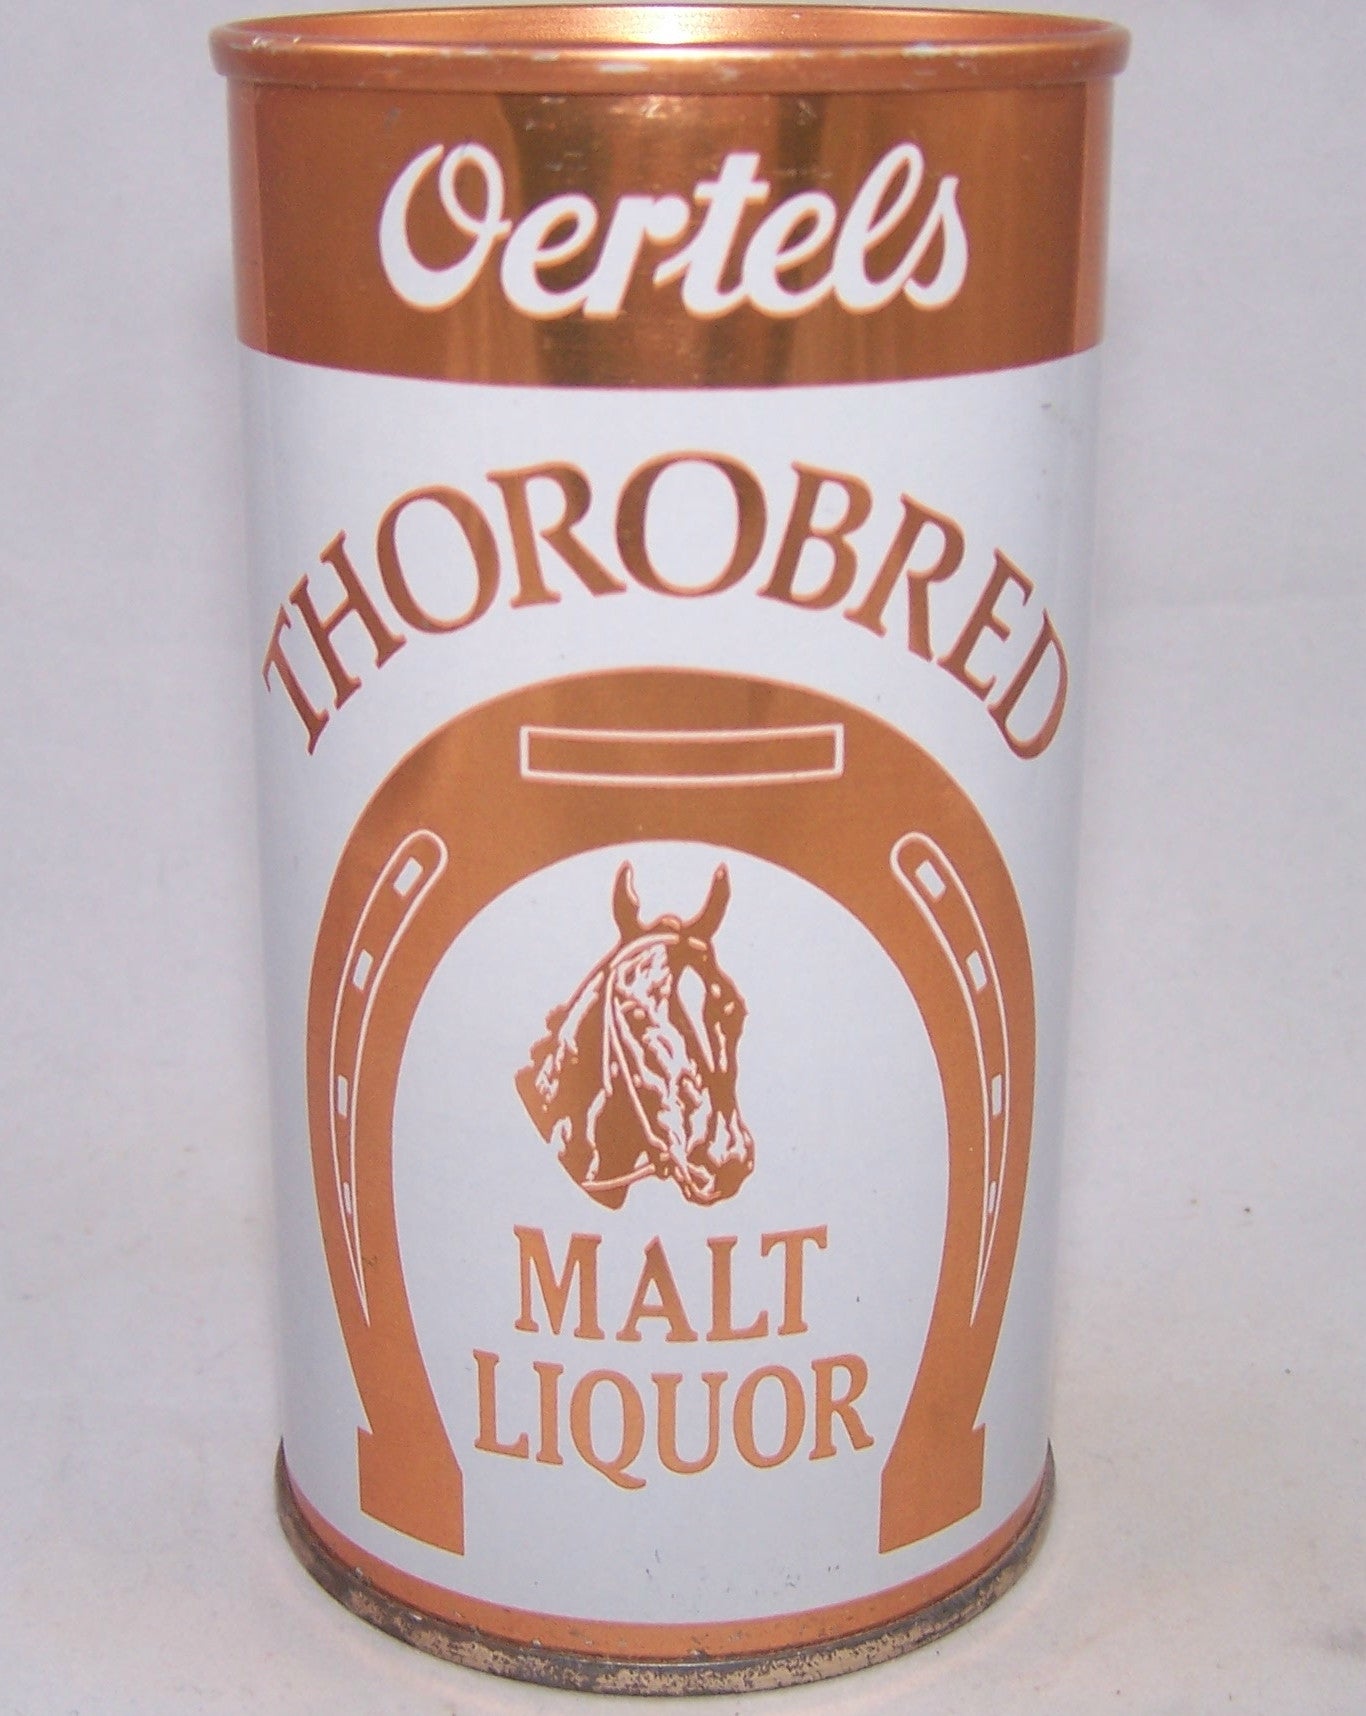 Oertels Thorobred Malt Liquor, USBC II 99-07, Grade 1/1+ Sold on 05/06/17